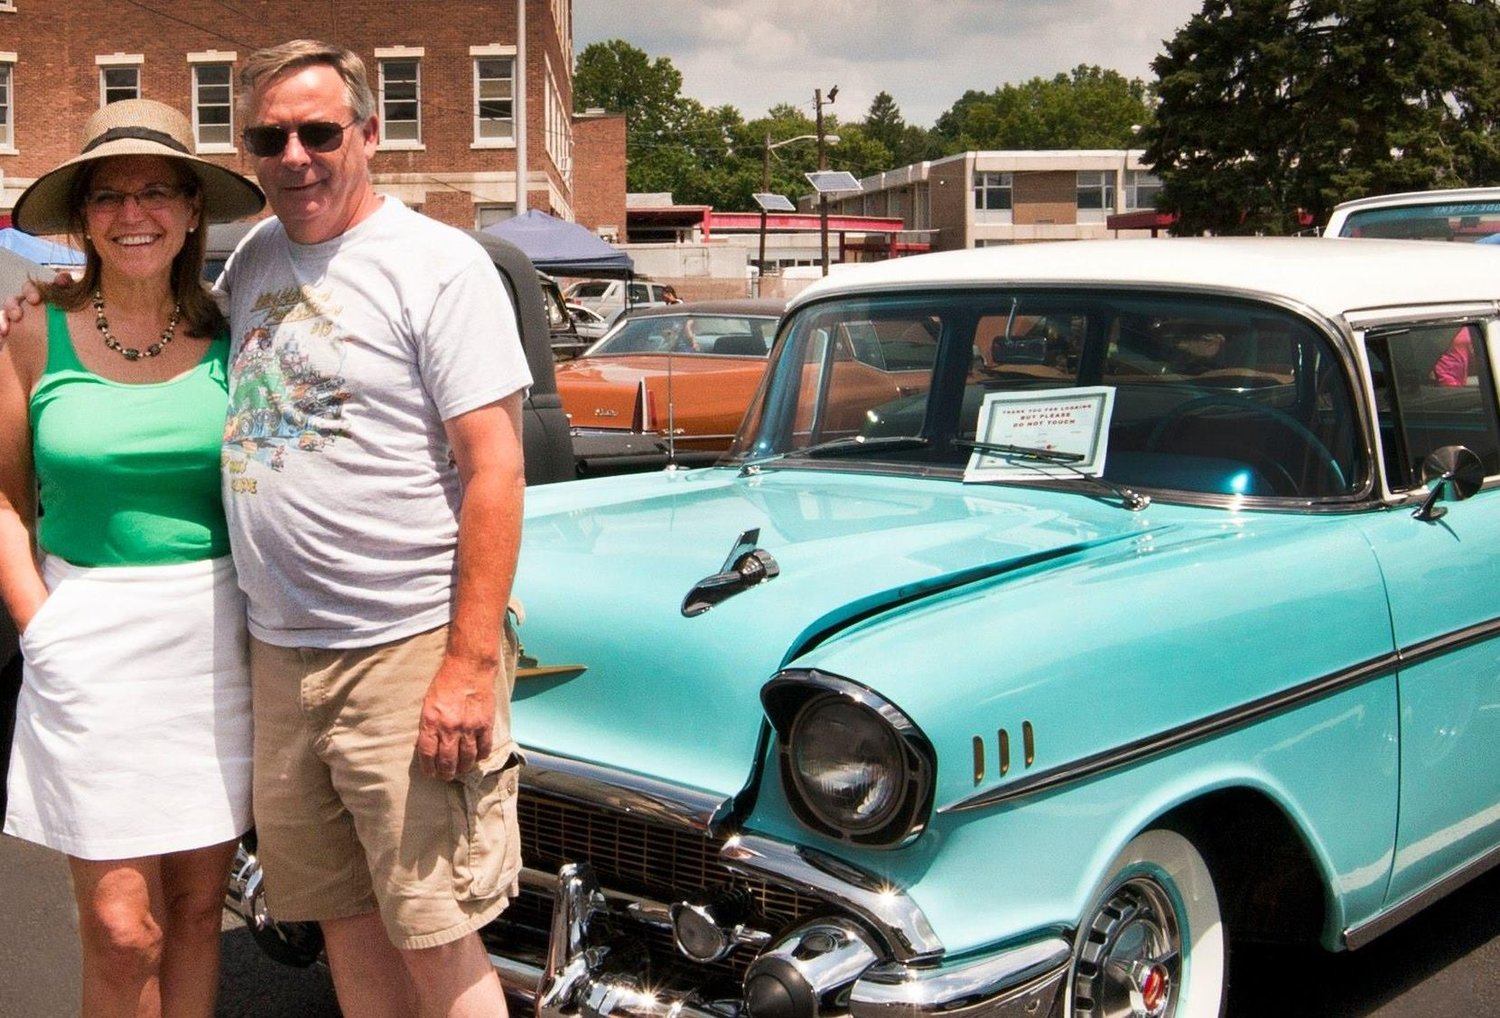 Chapel Ridge’s Classic Car Club aims to unite community through cars